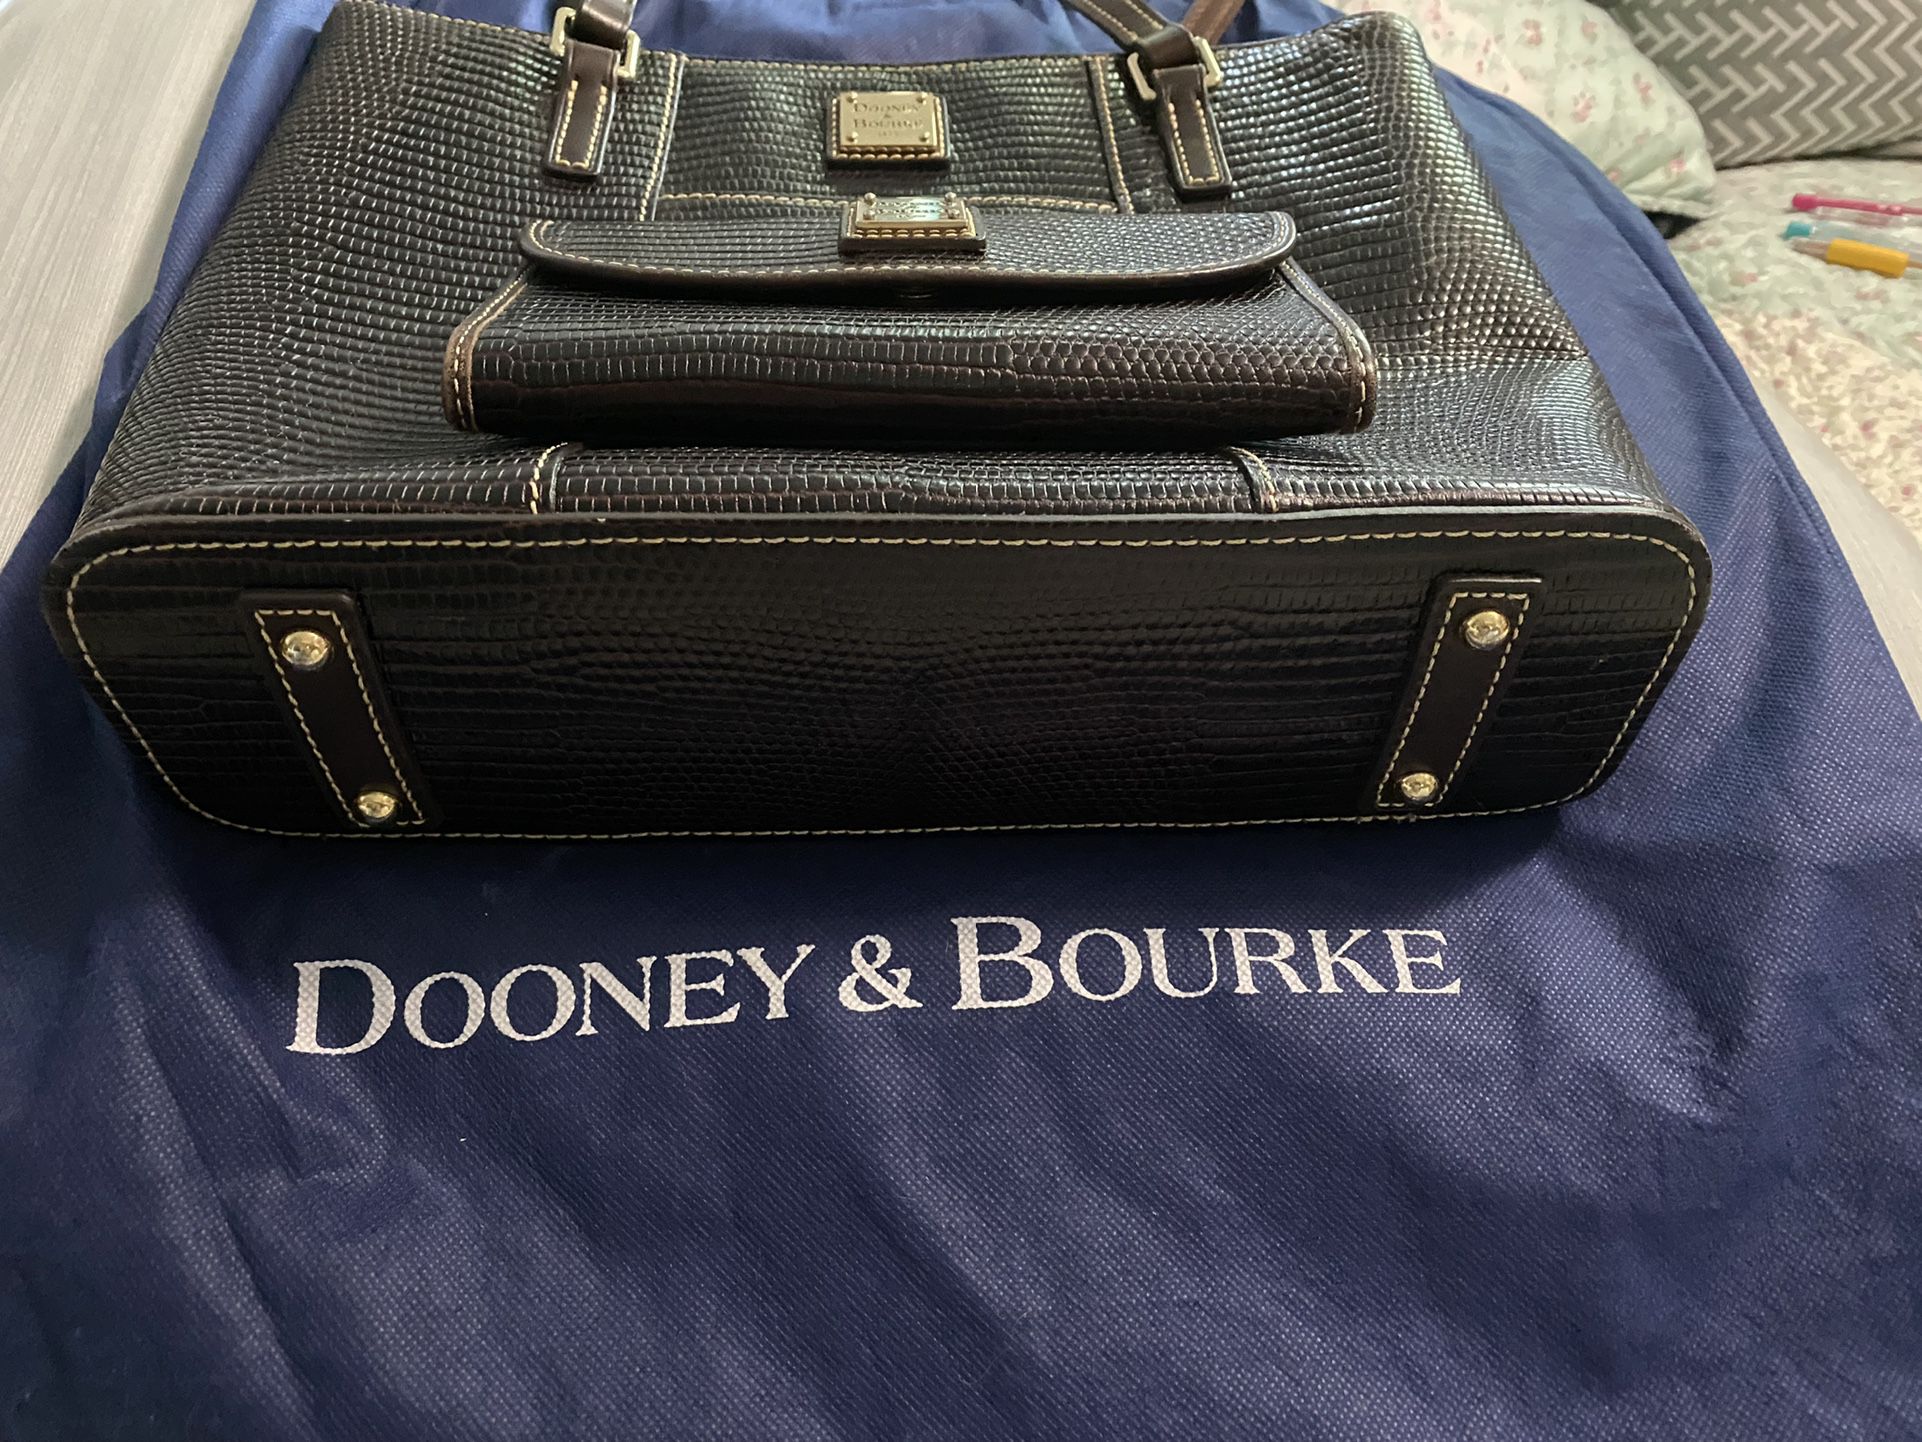 Dooney & Bourke Purse and Wallet